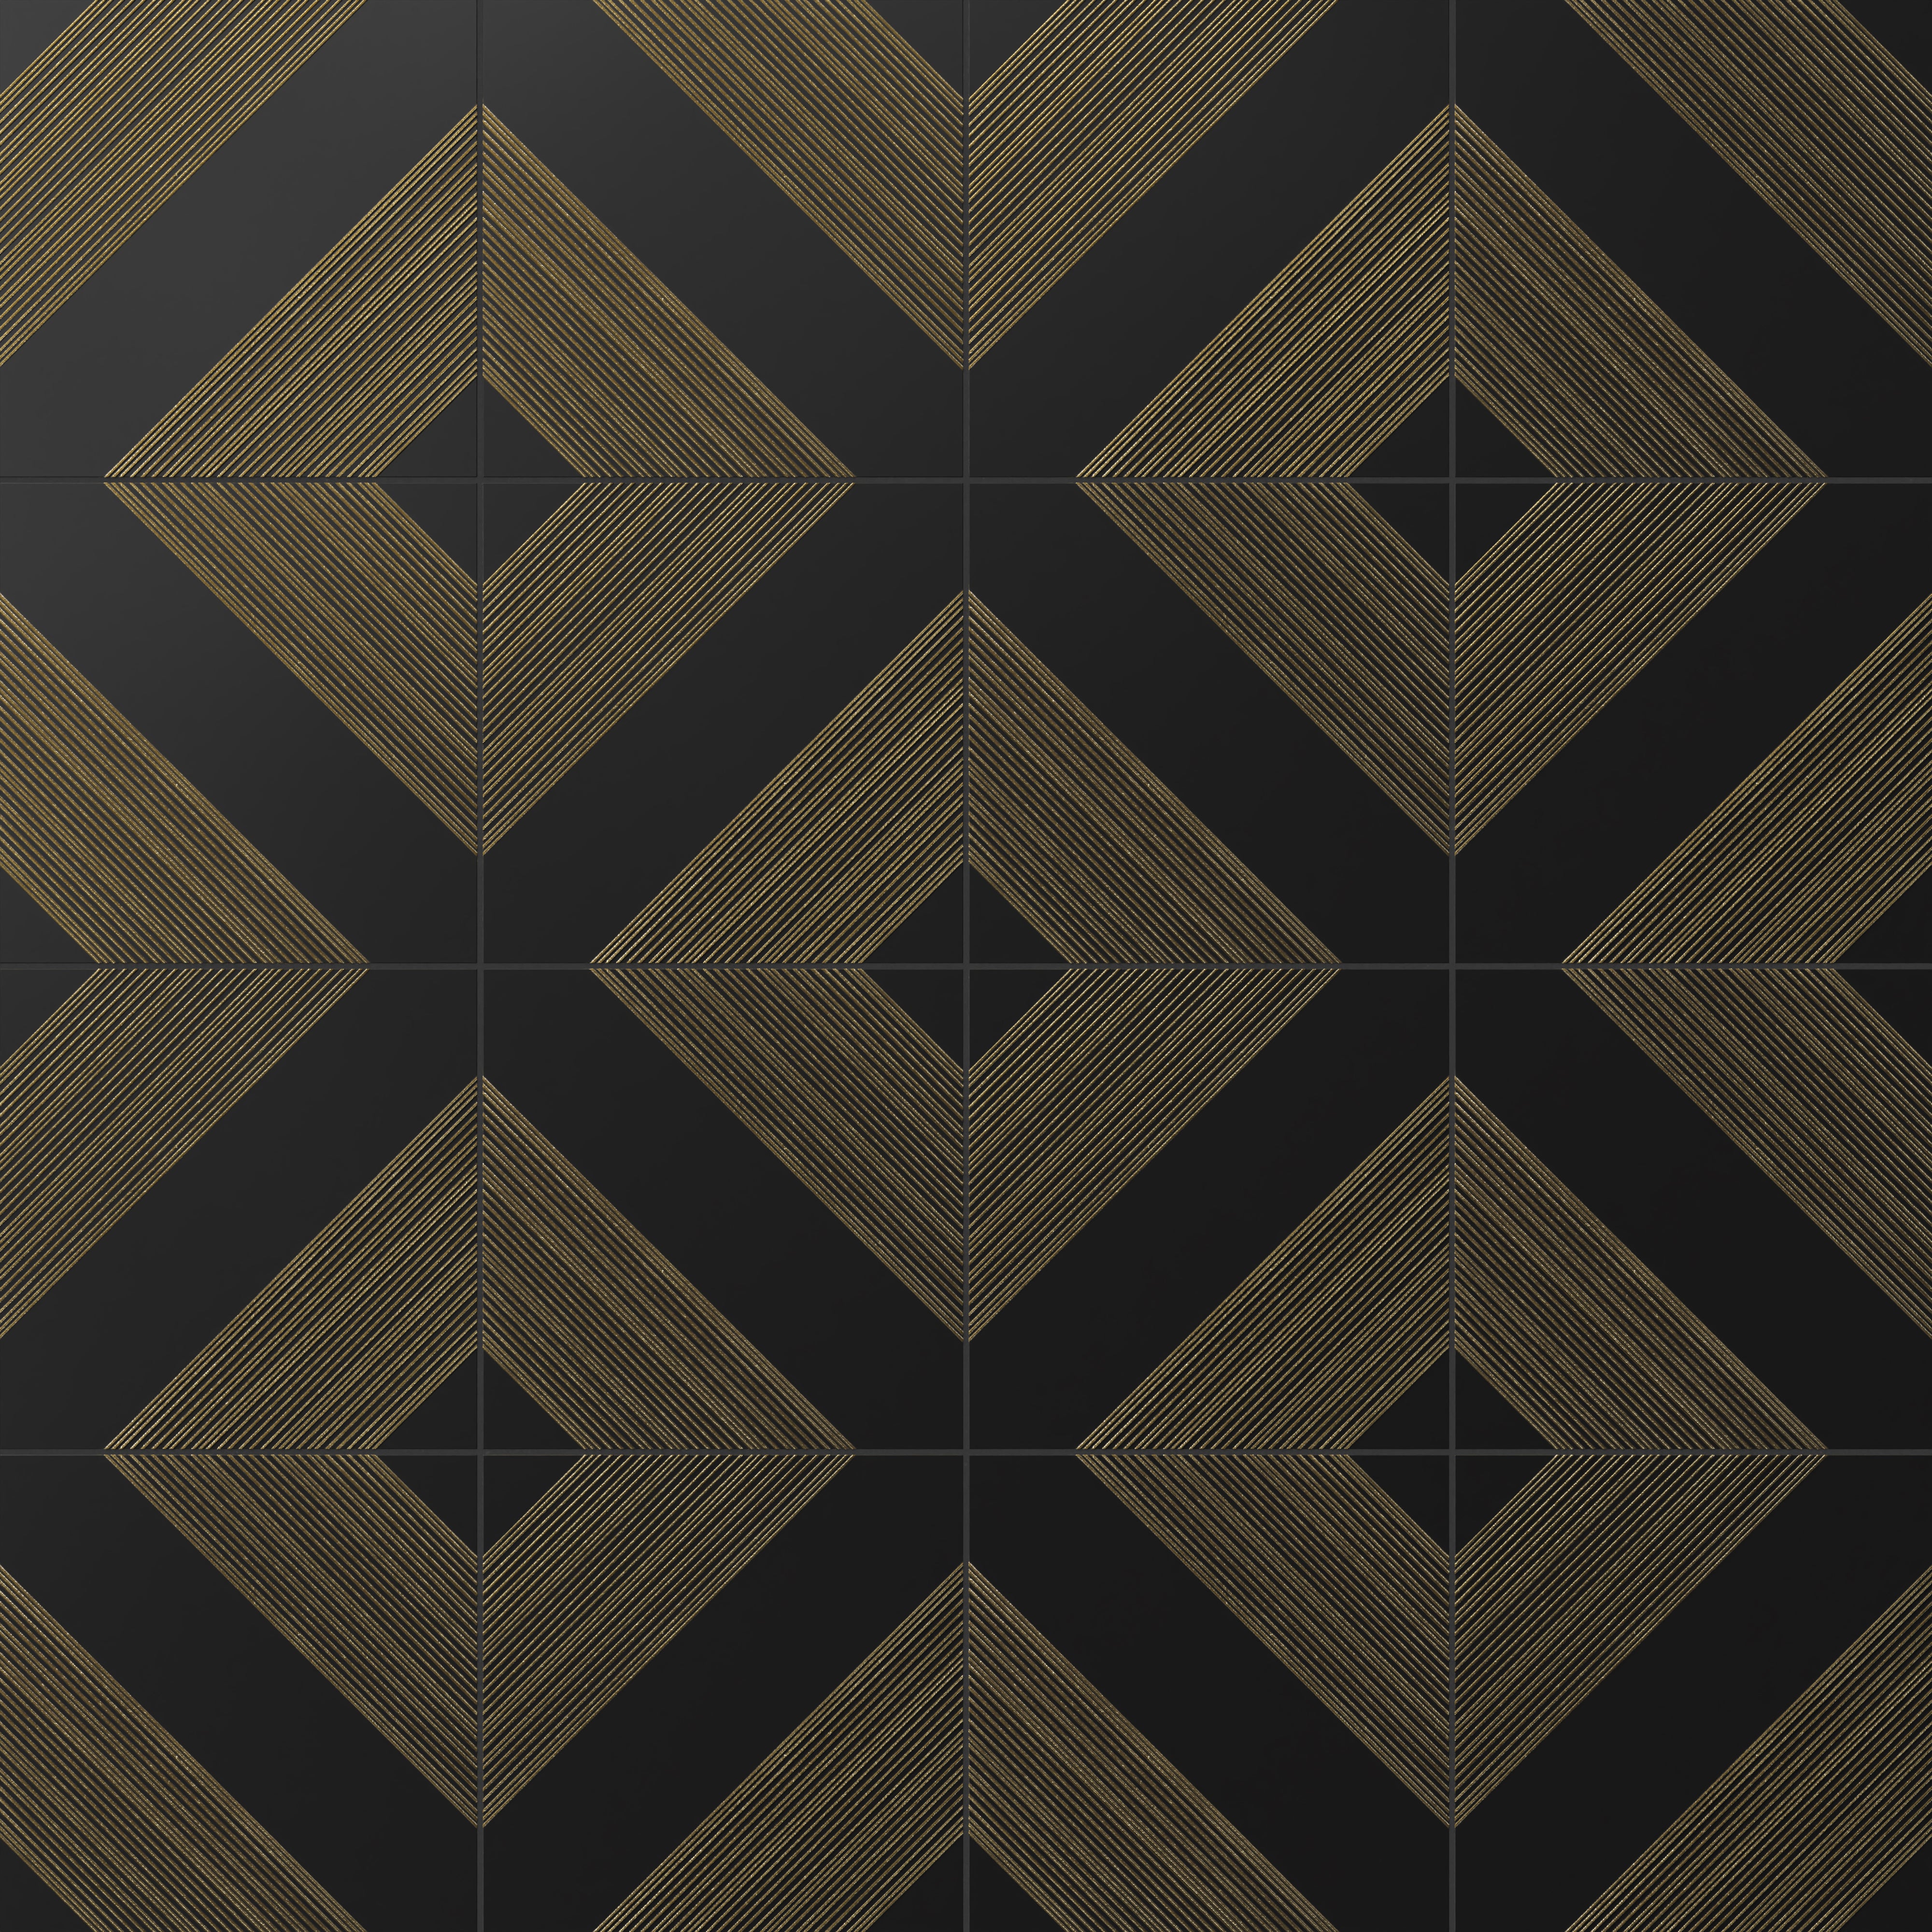 Estelle 12x12 Satin Ceramic Tile in Deco 1 Black Gold